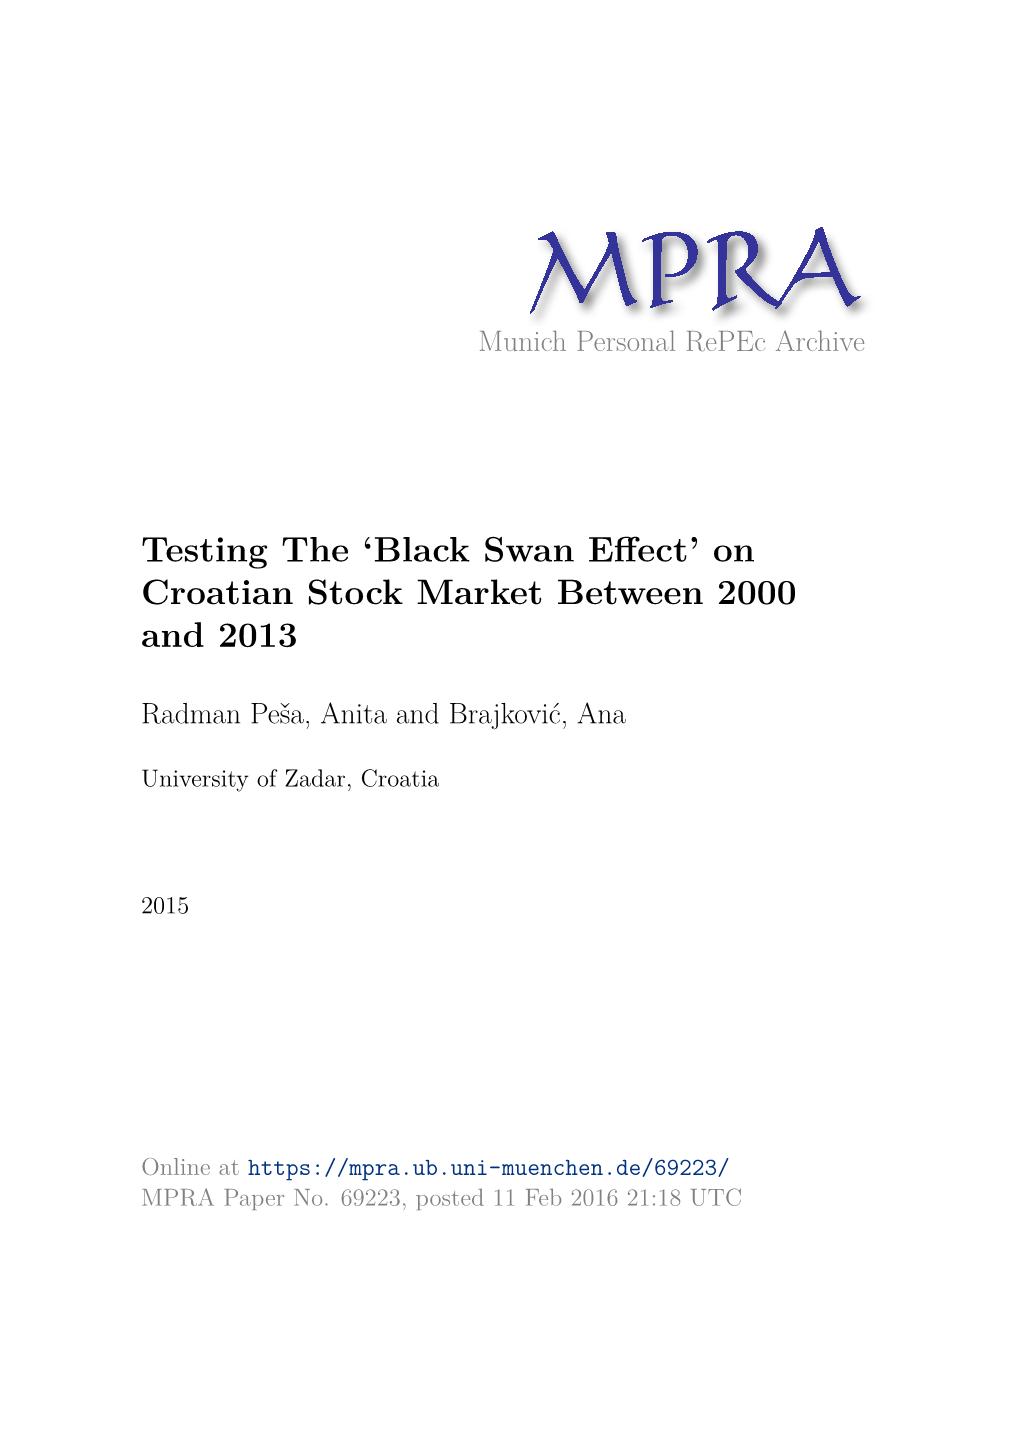 Testing the 'Black Swan Effect' on Croatian Stock Market Between